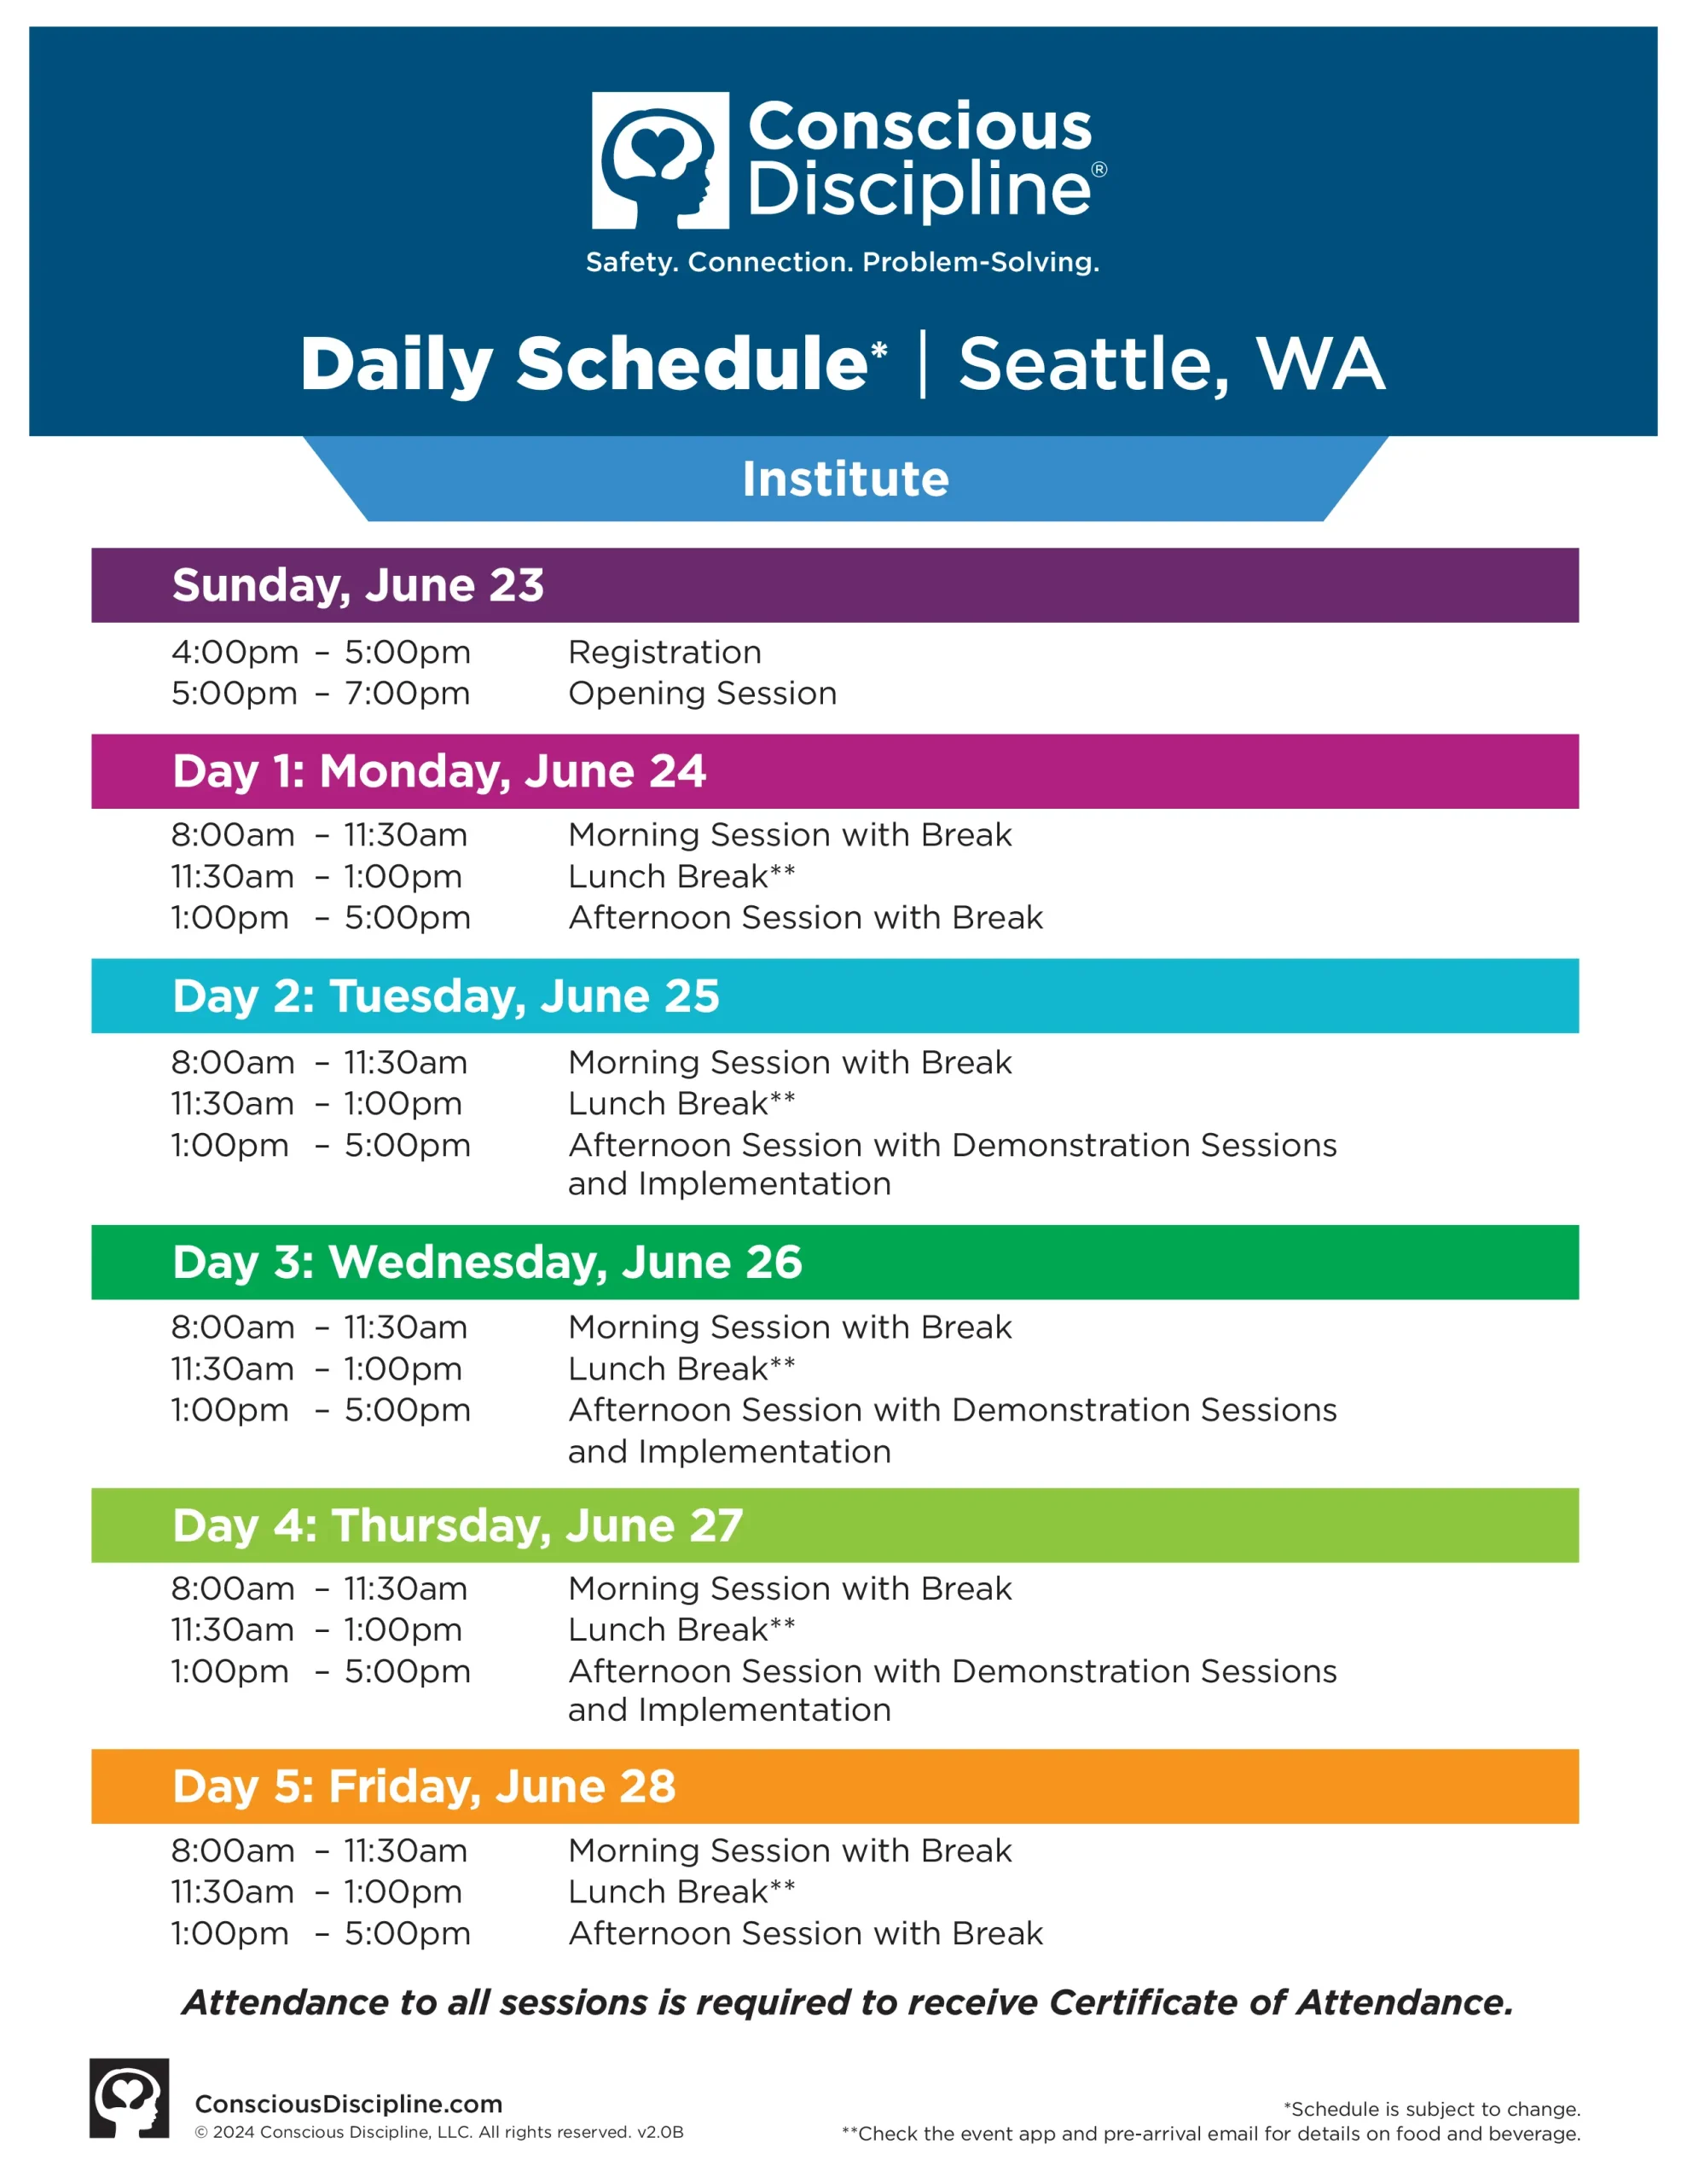 Seattle, WA schedule